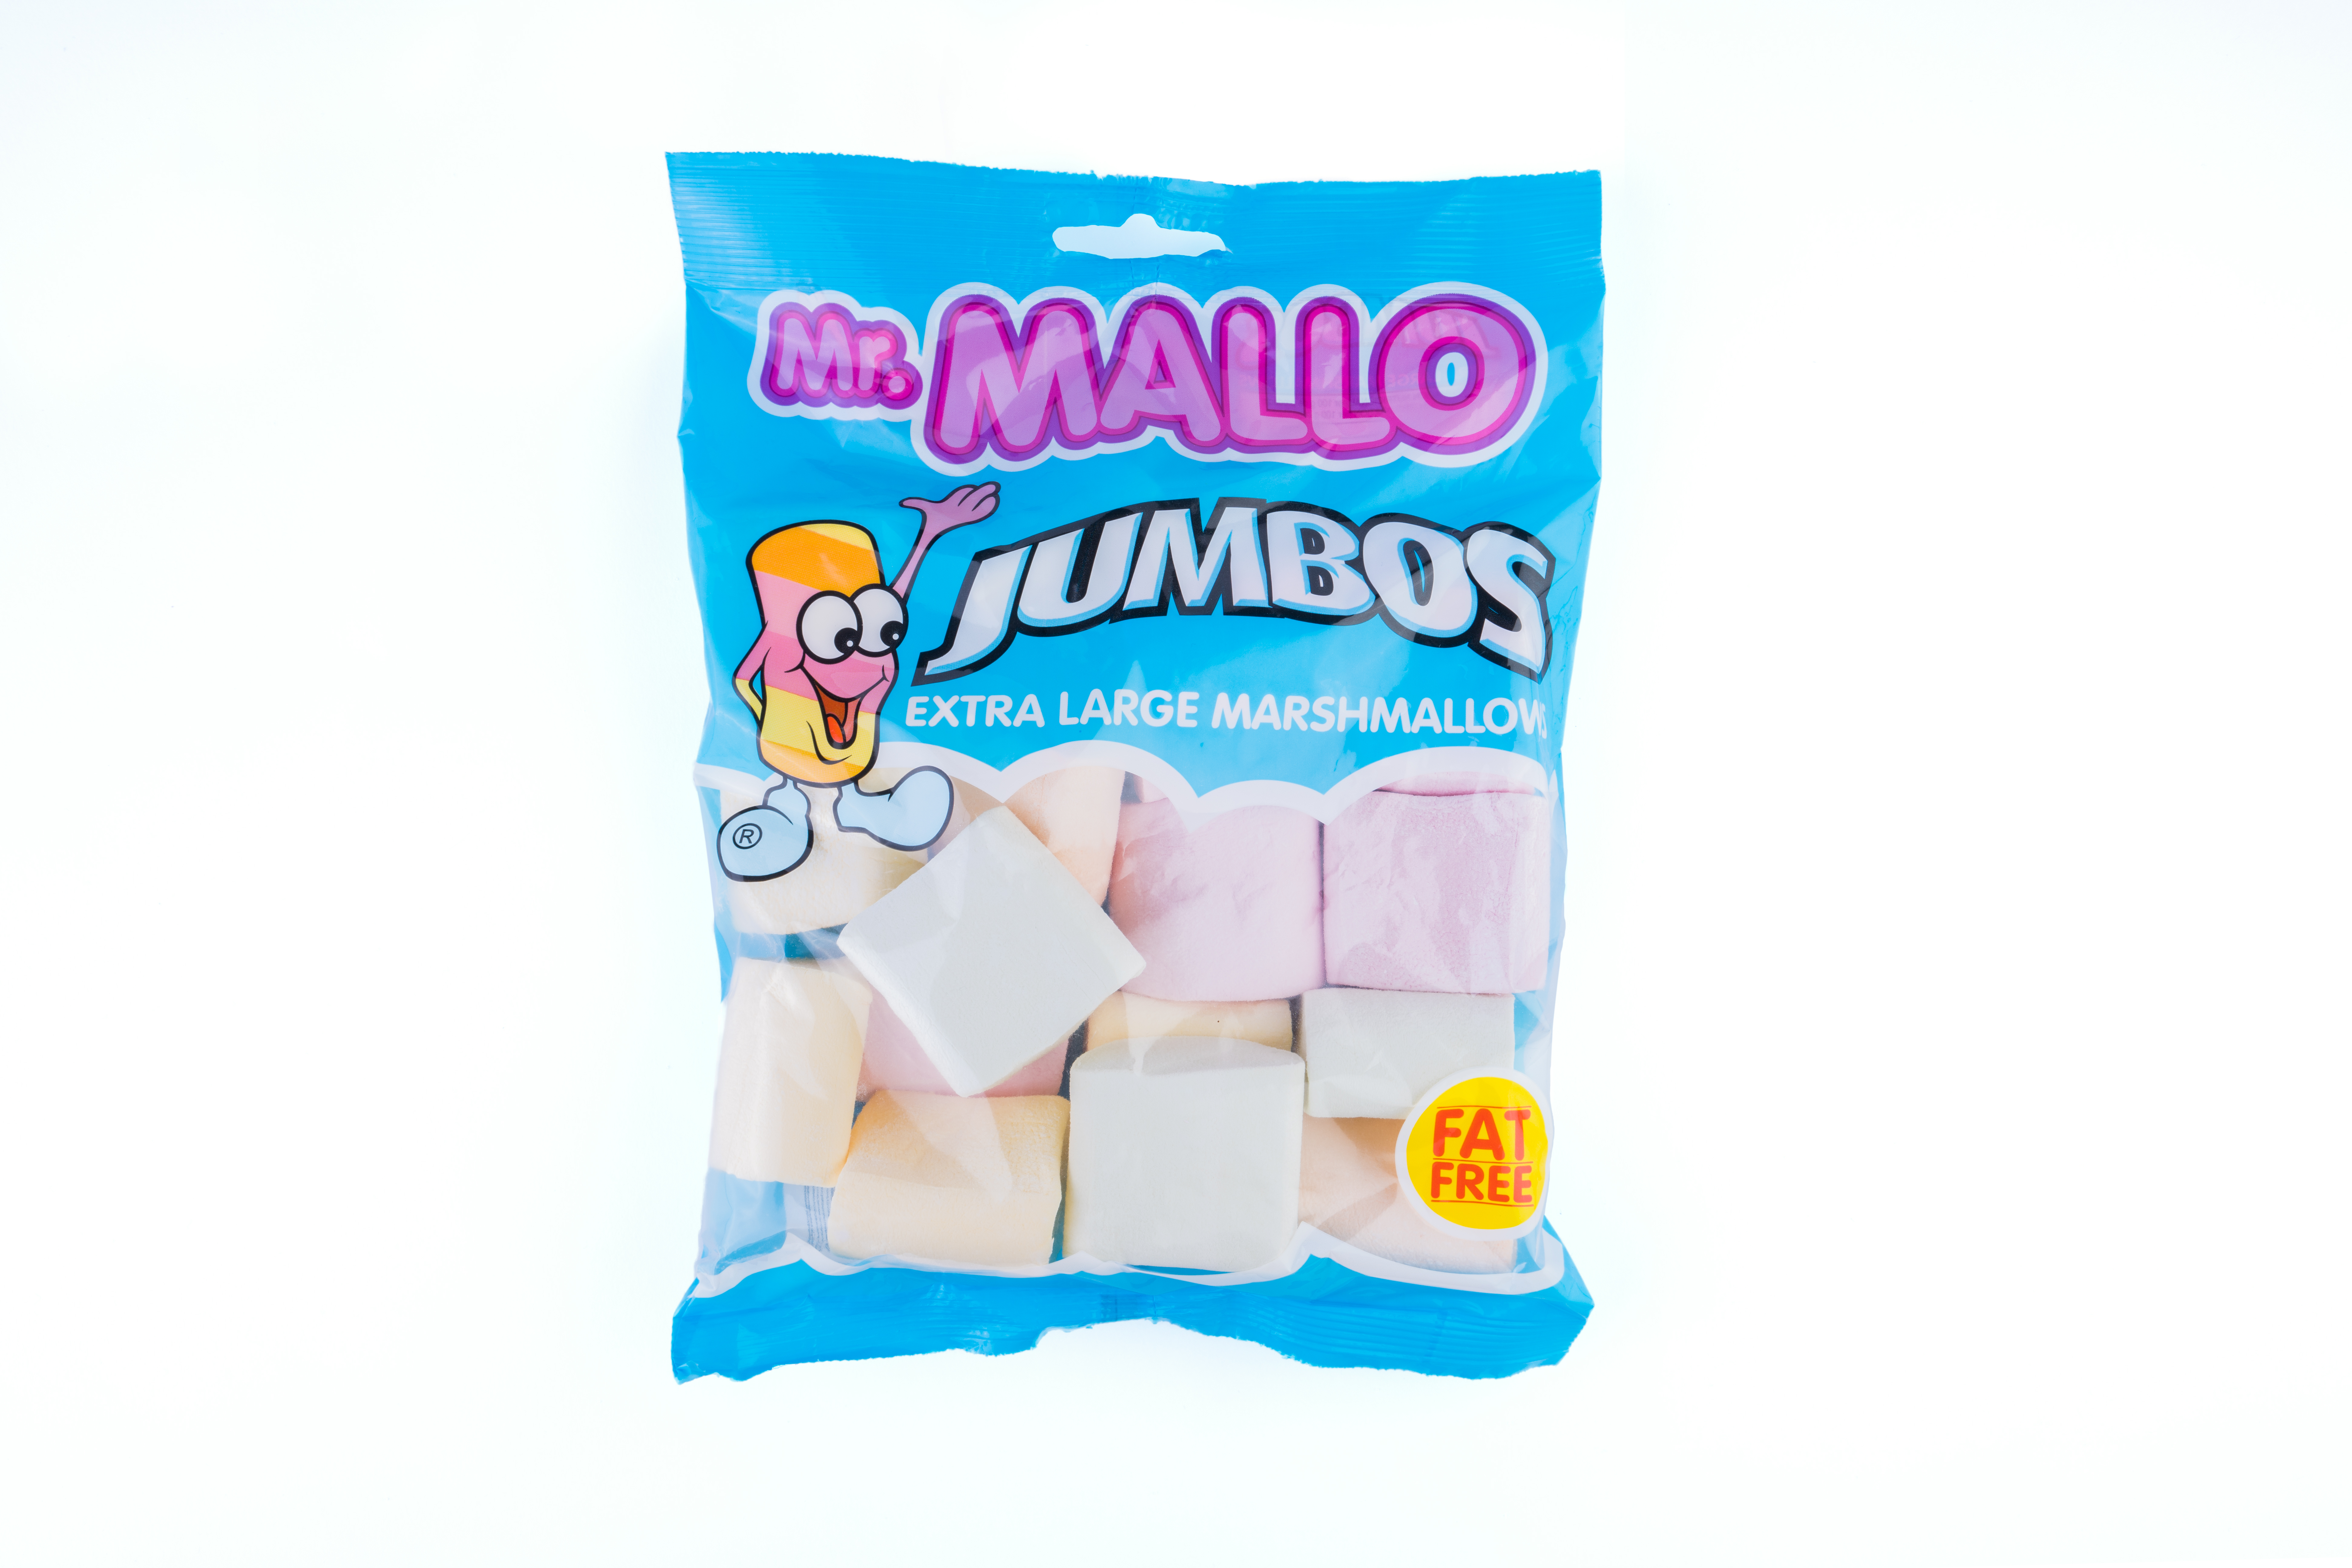 Mr. Mallo BBQ jumbos pillow bag 250g - 300g